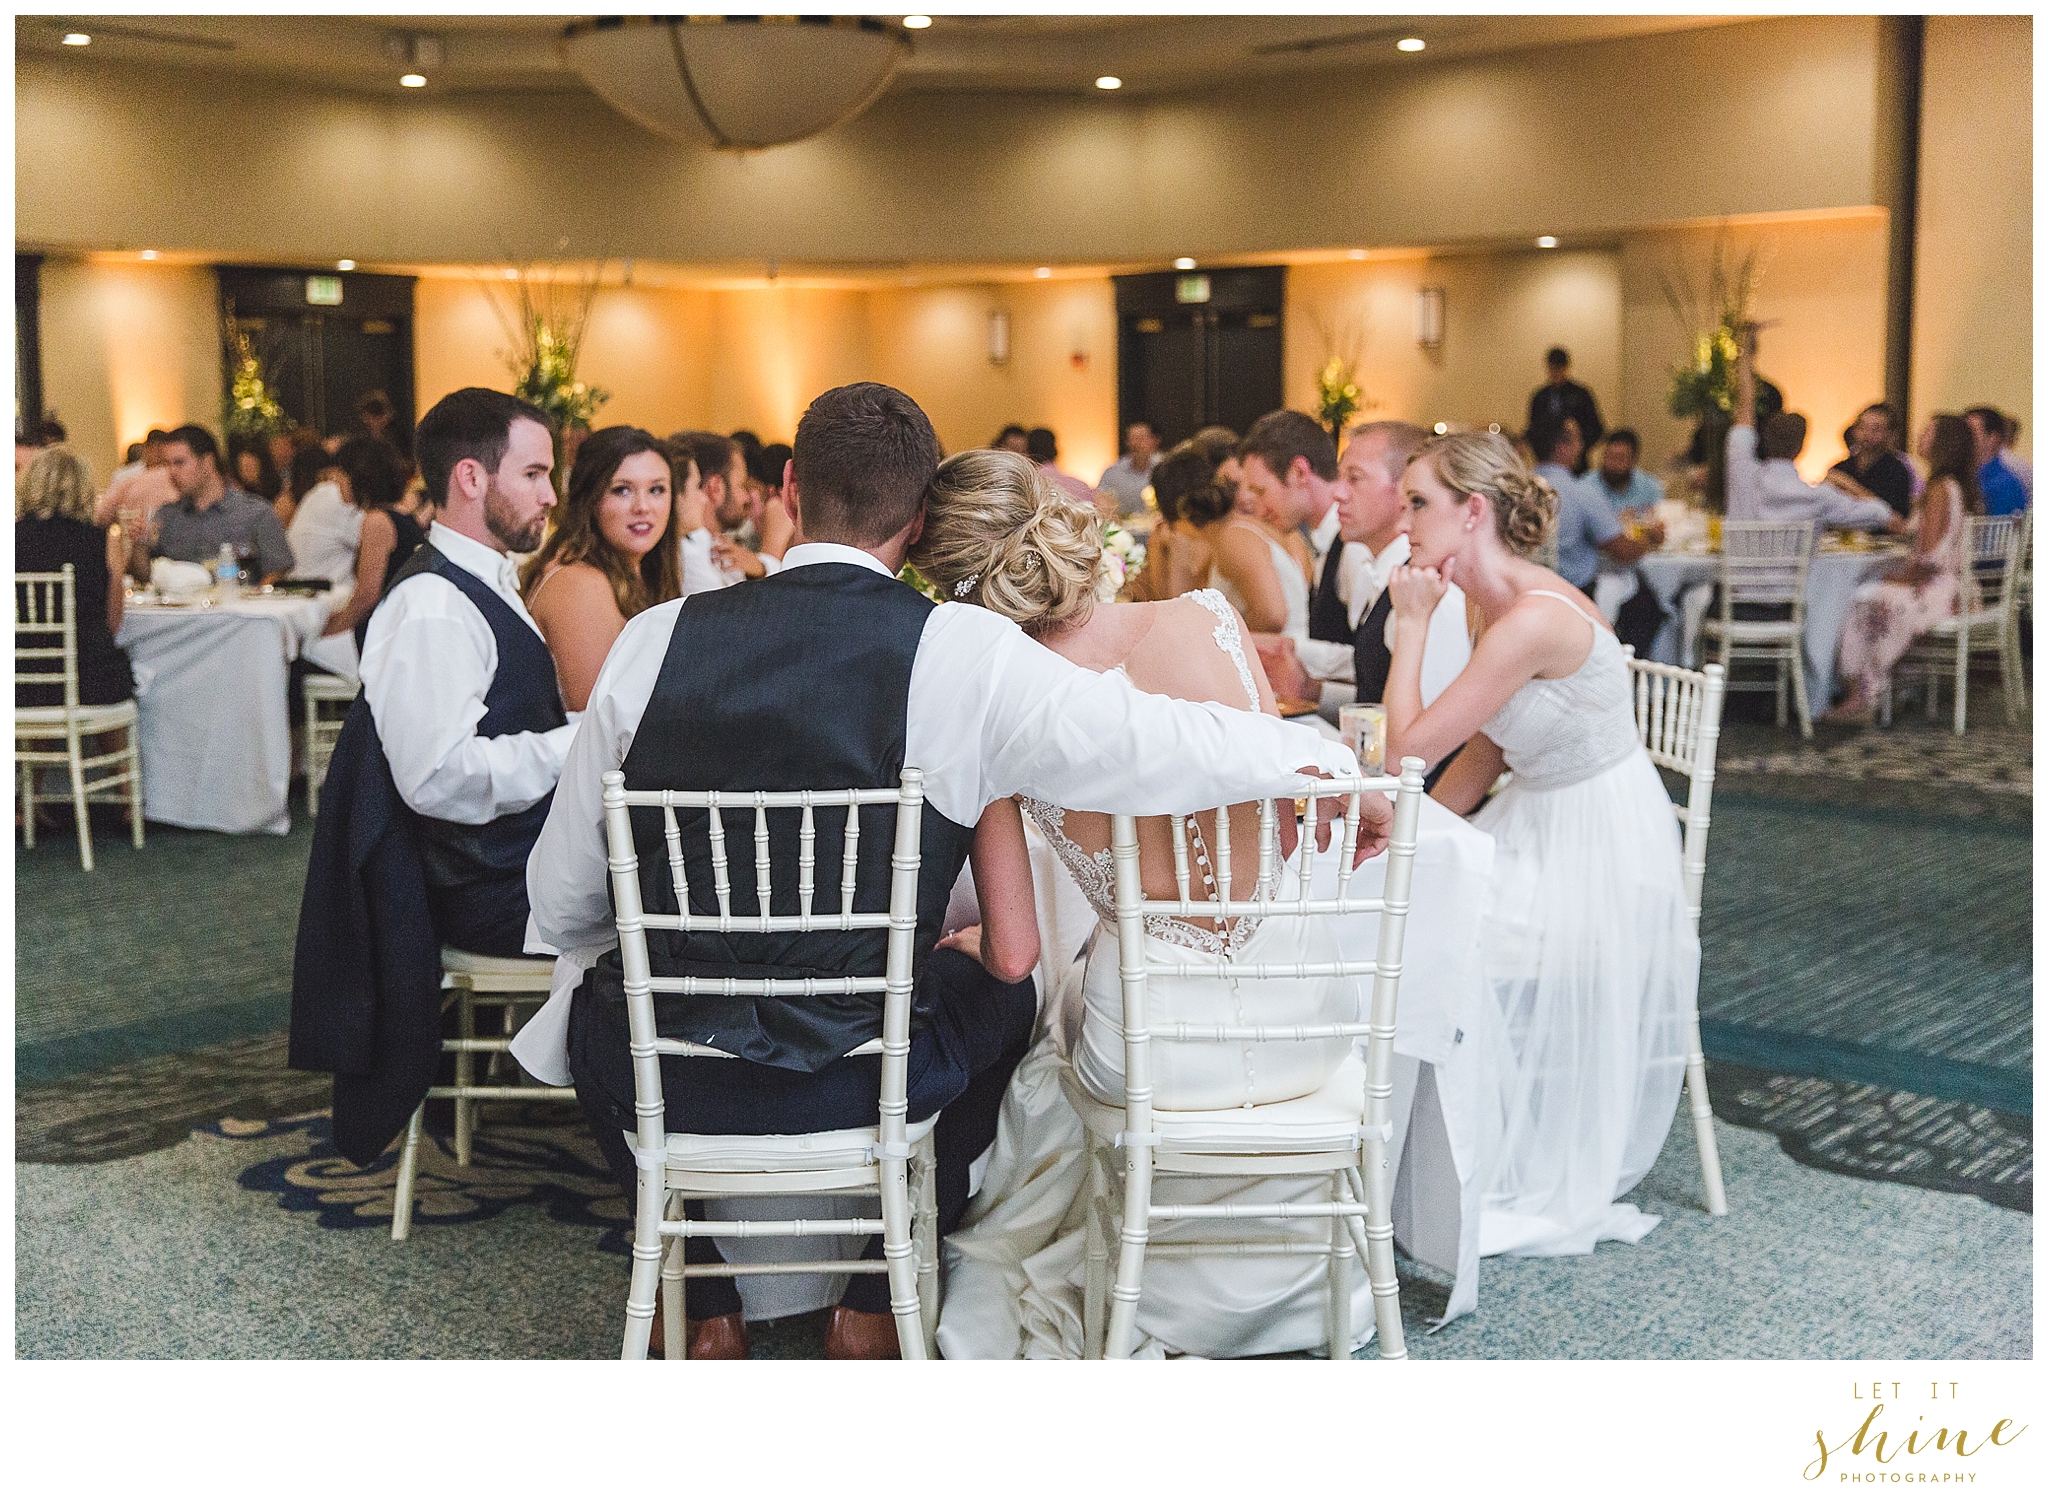 The Grove Hotel Boise Wedding 2017 Let it Shine Photography-0783.jpg